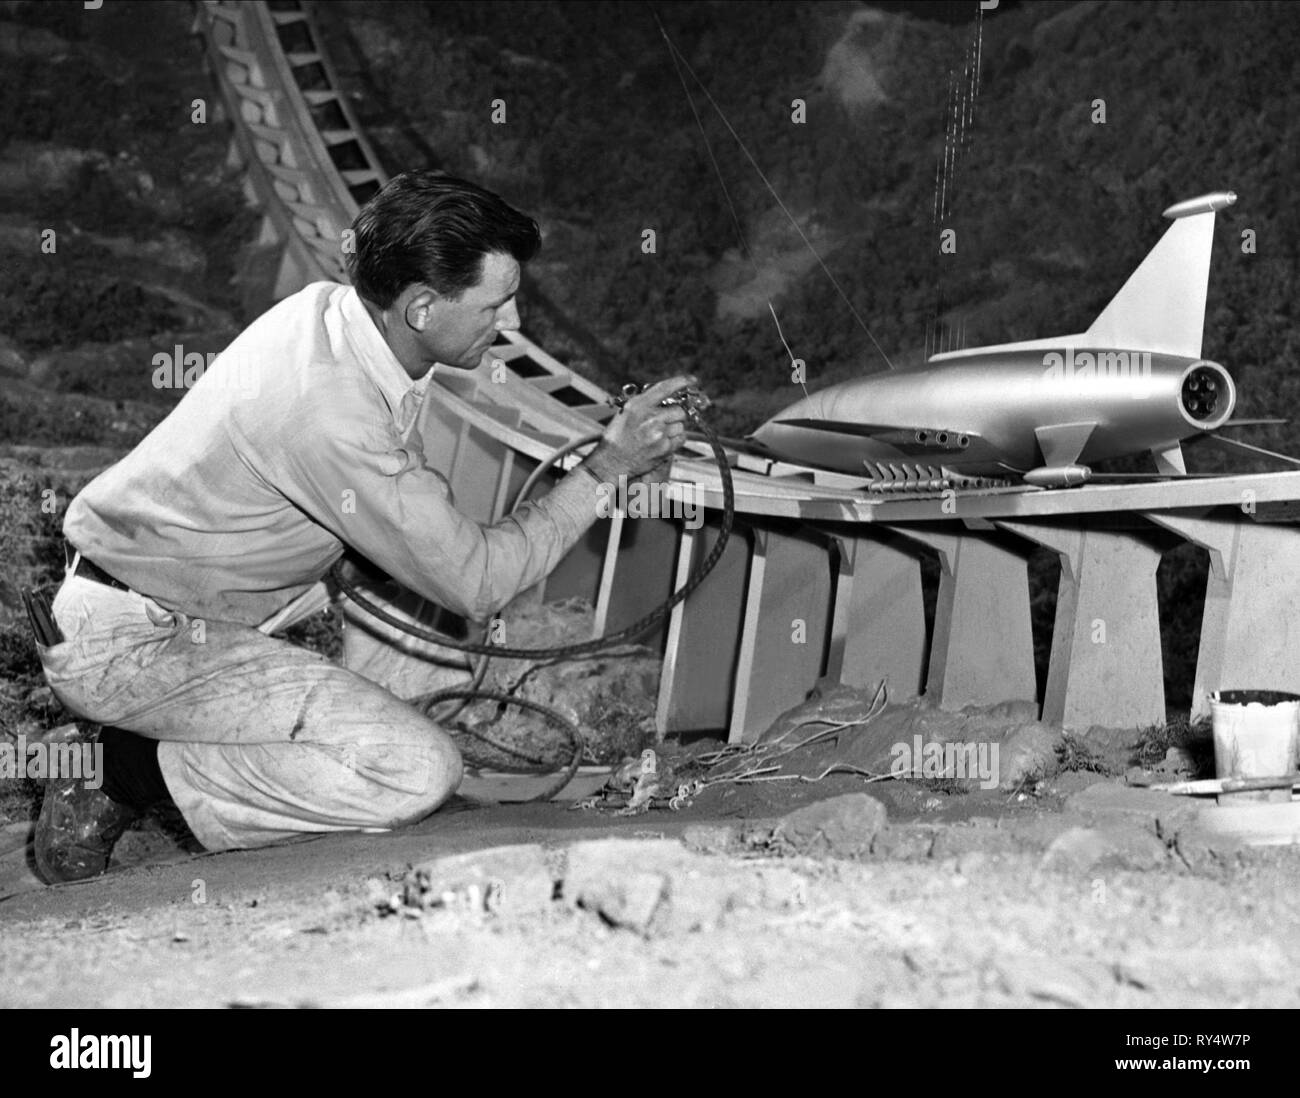 SPACEROCKET SCENE, WHEN WORLDS COLLIDE, 1951 Stock Photo